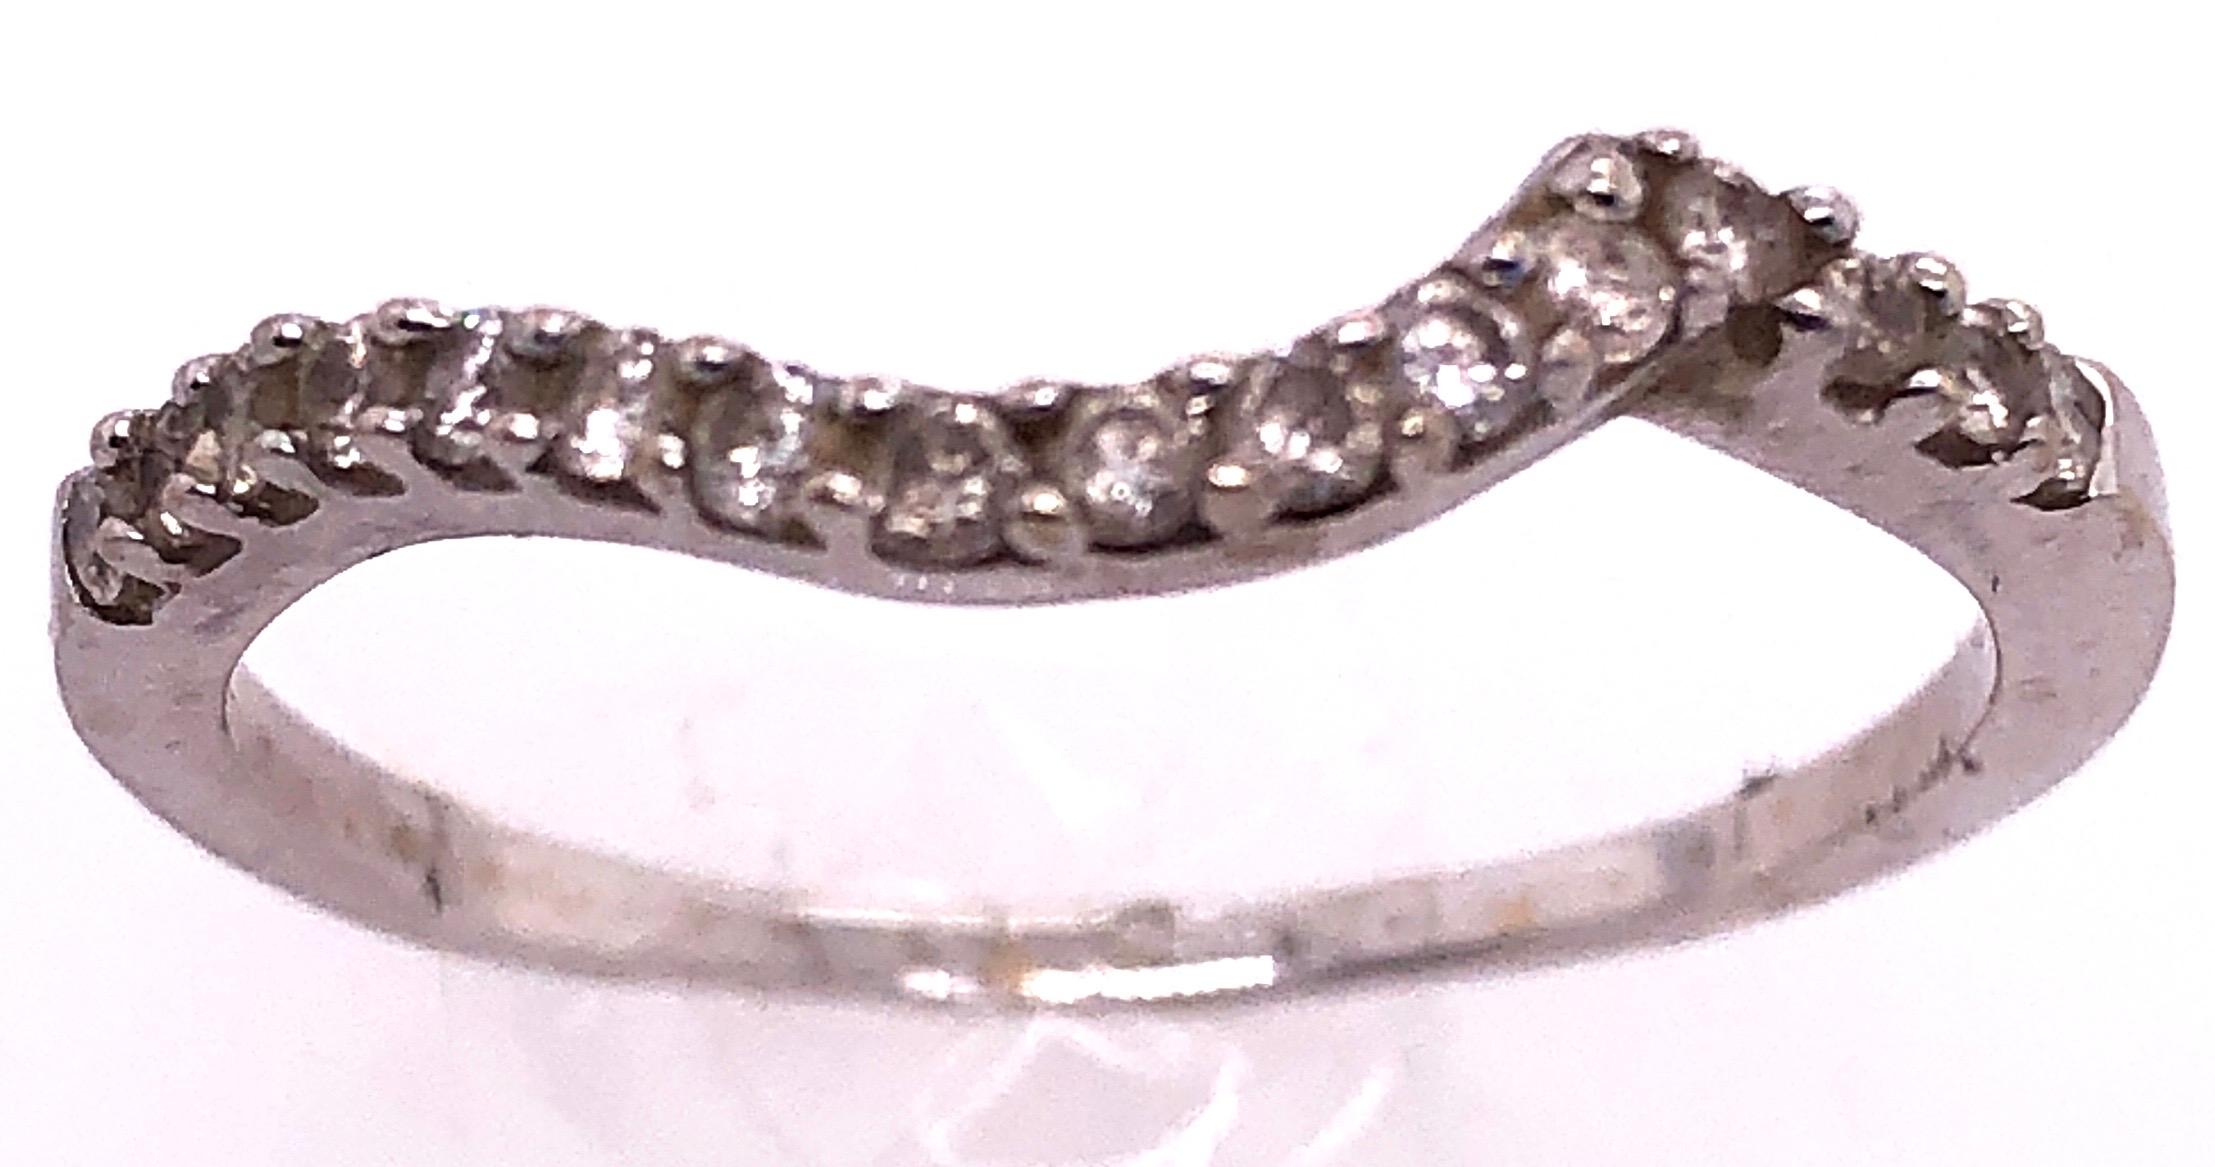 14 Karat White Gold And Diamond Free Form Ring
Size 8
2 grams total weight.
.25 tdw
